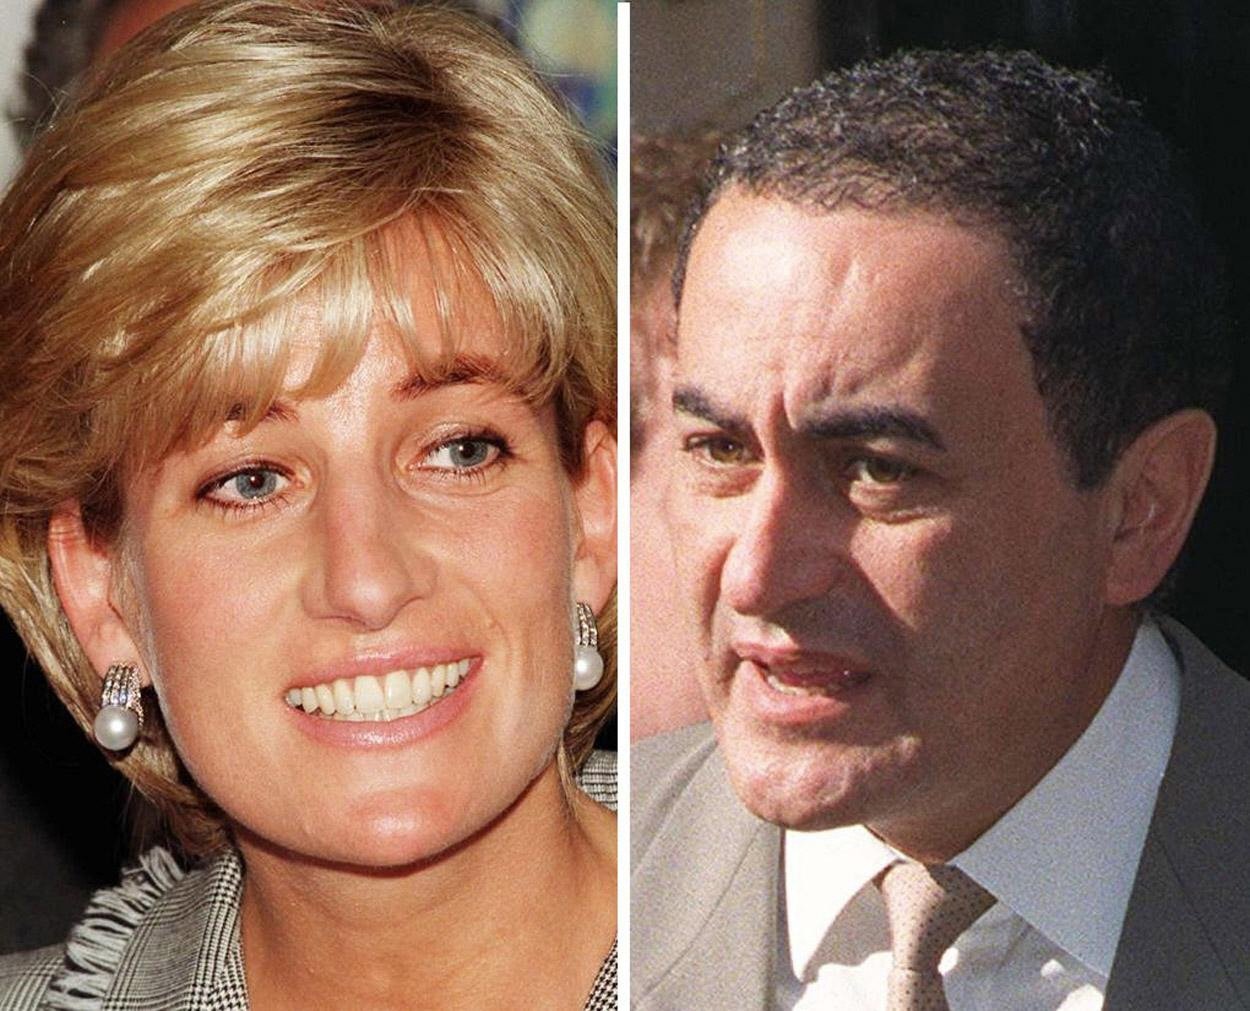 Side-by-side headshots of Princess Diana and her boyfriend Dodi Fayed